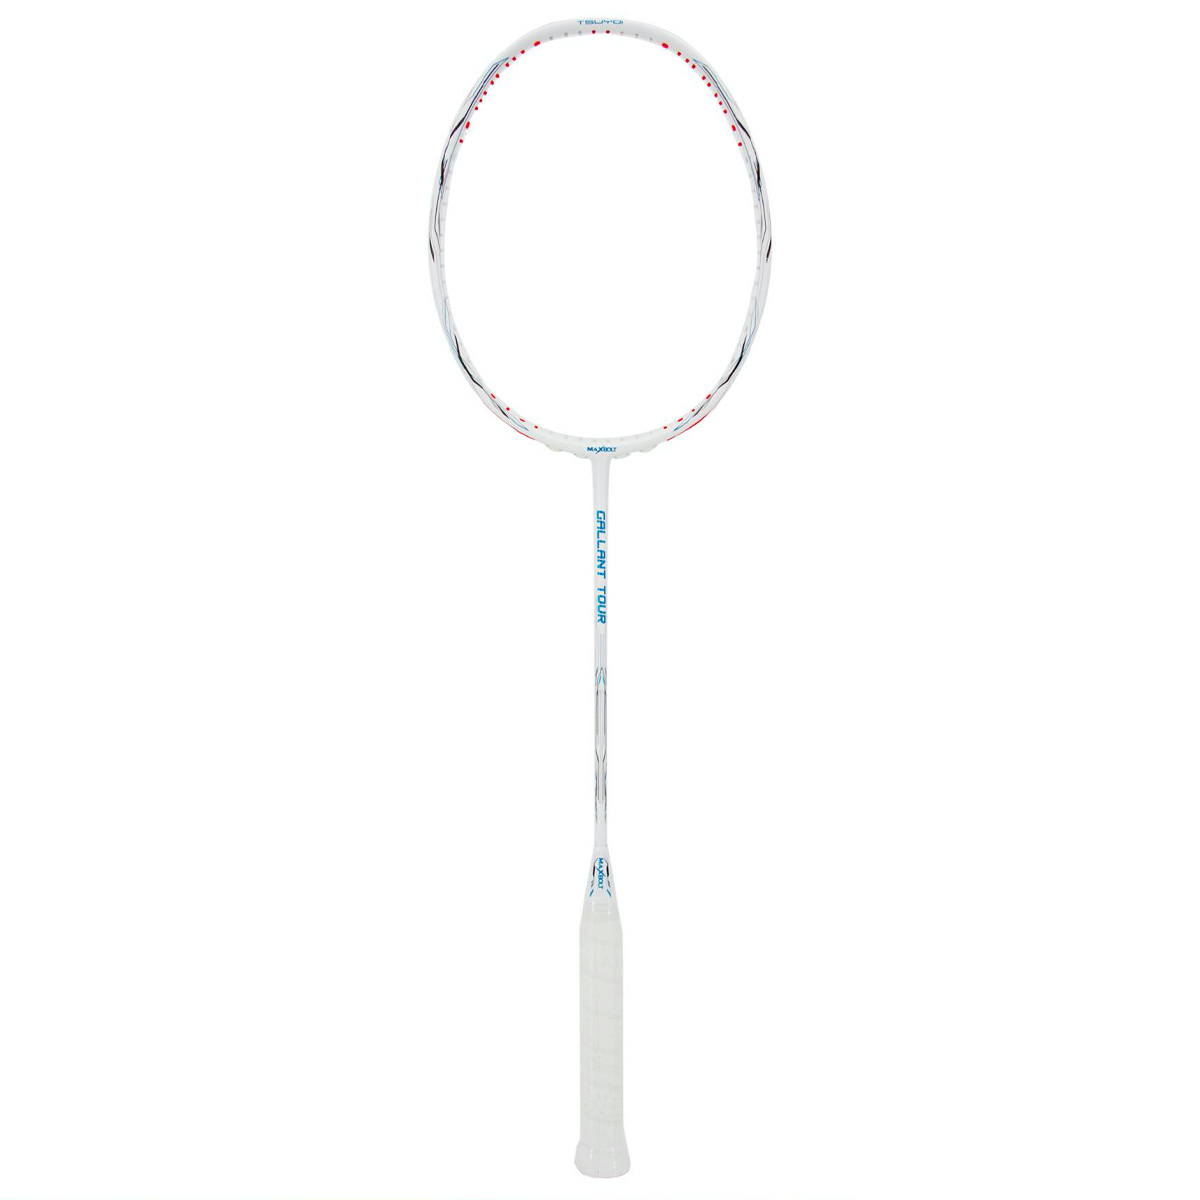 maxbolt gallant tour badminton racket review